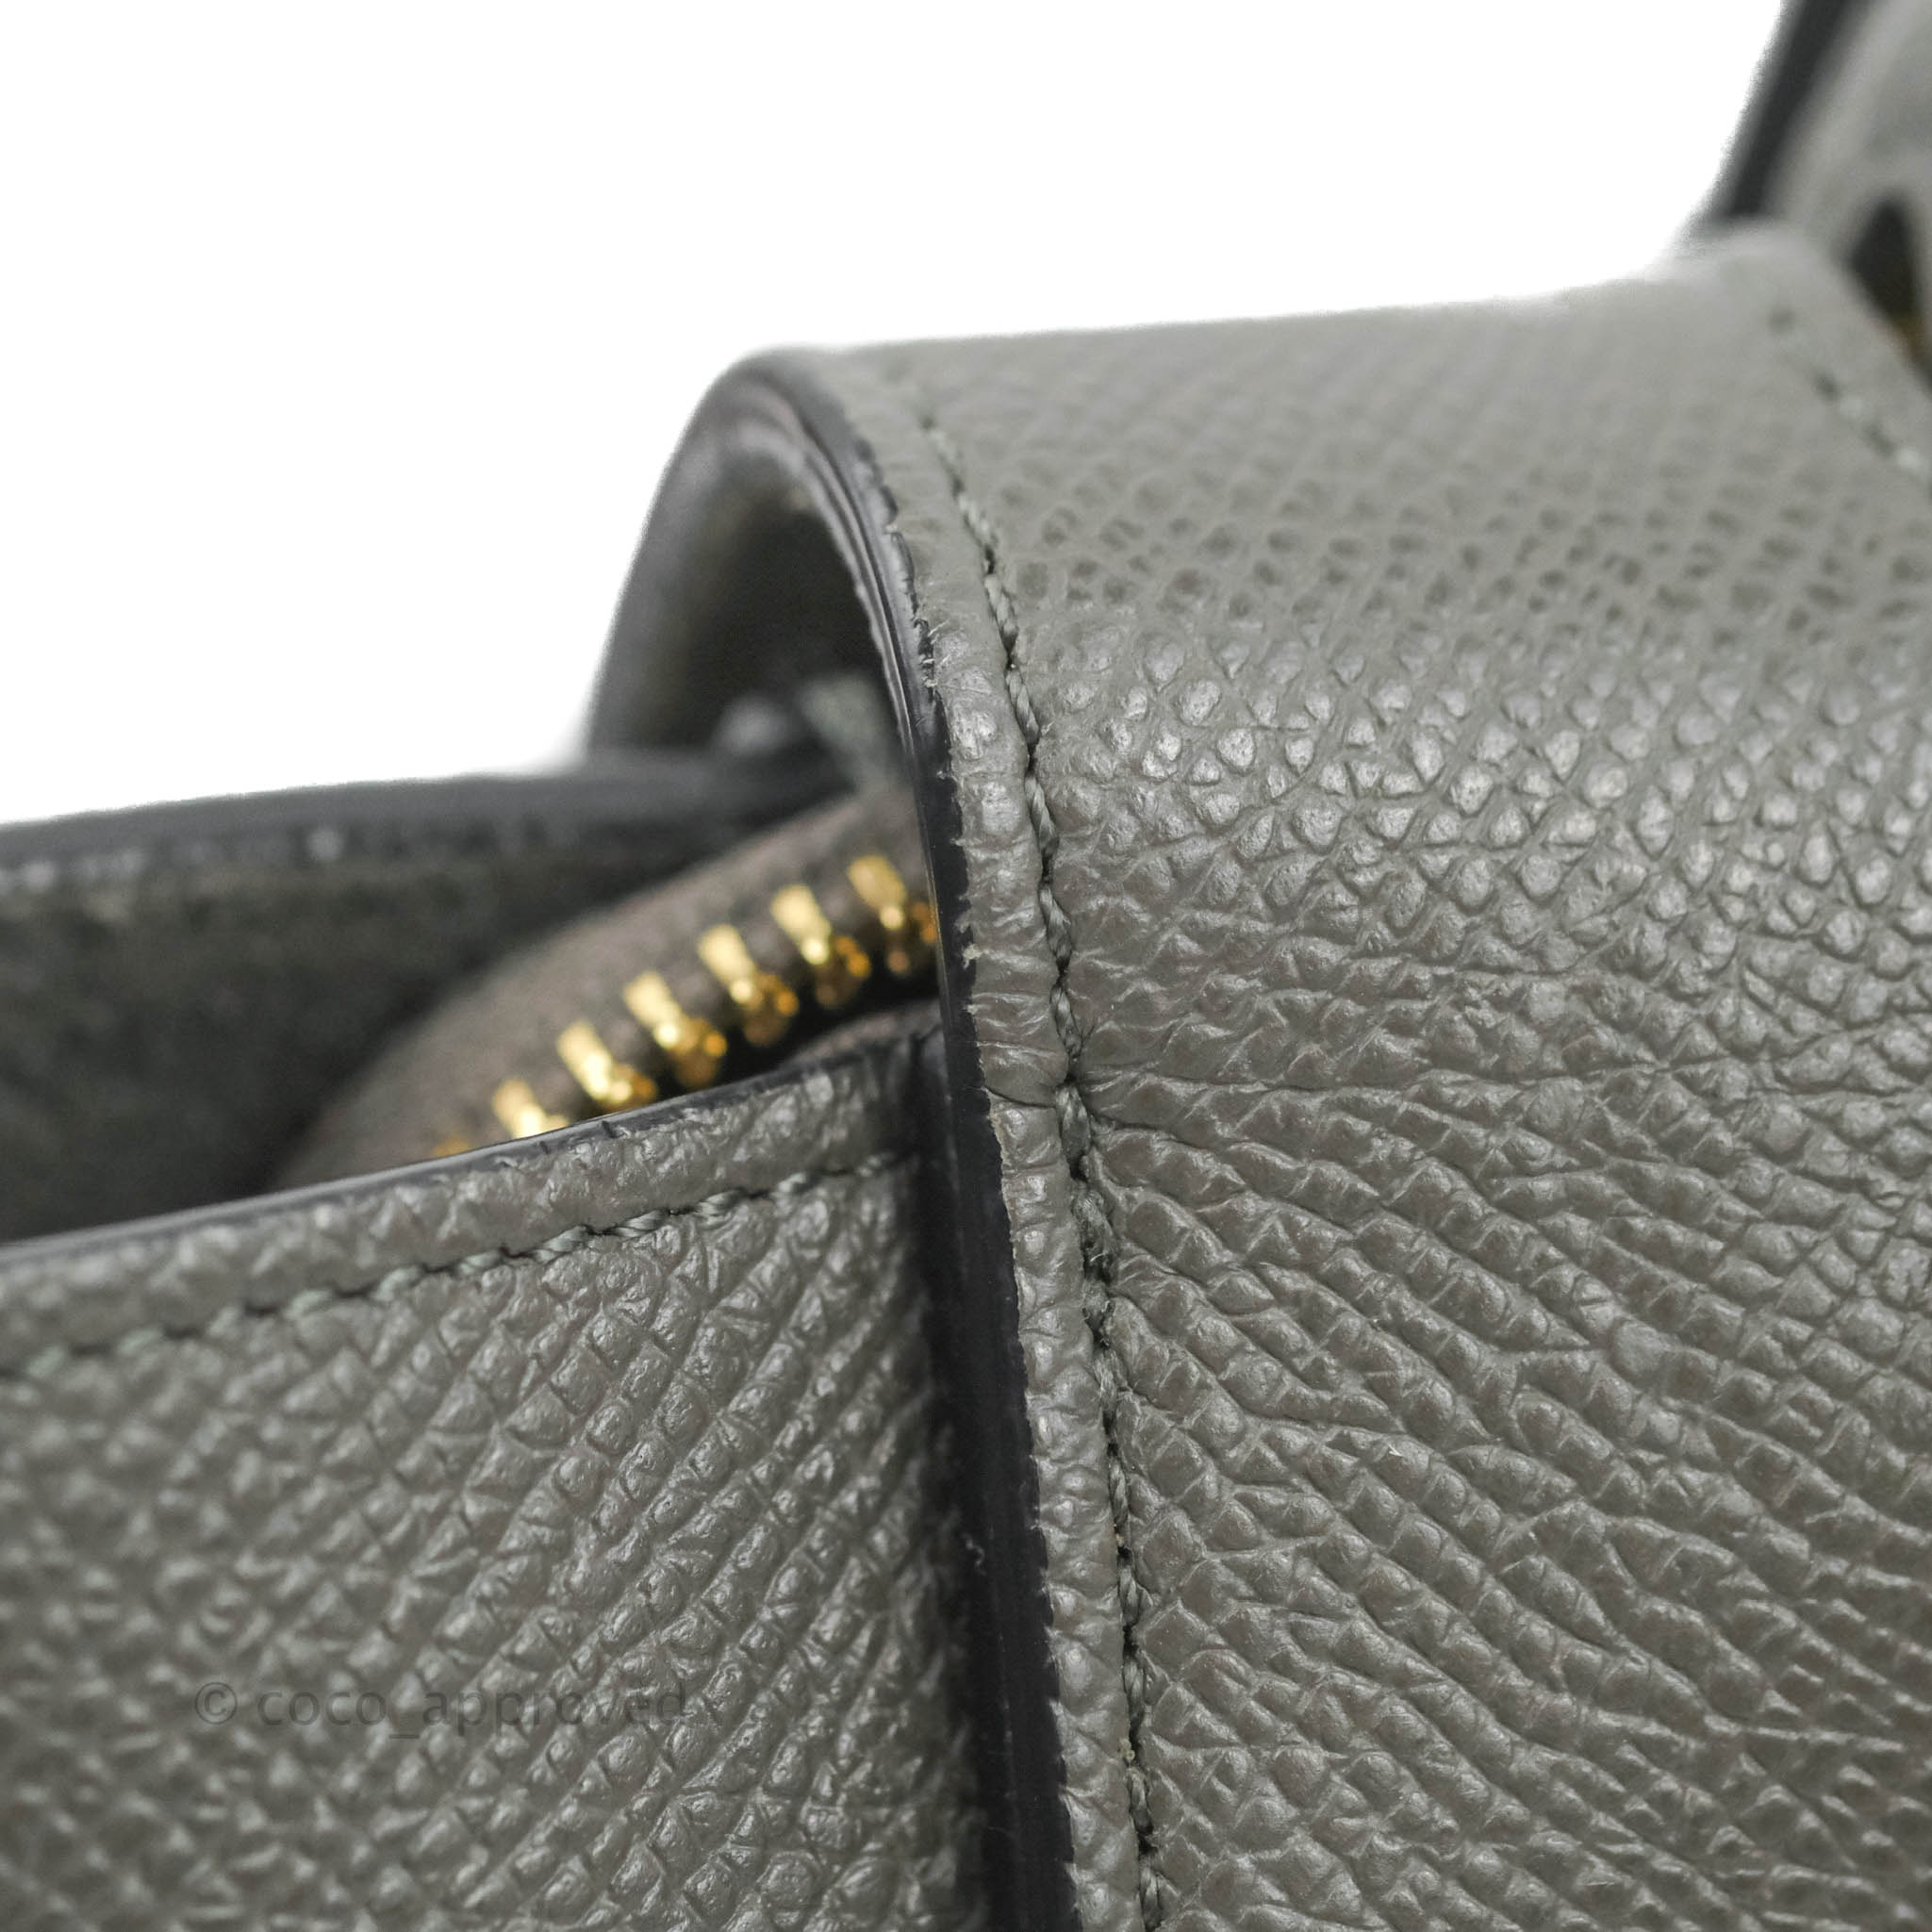 Celine Nano Belt Bag e Grained Calfskin Gold Hardware – Coco Approved  Studio